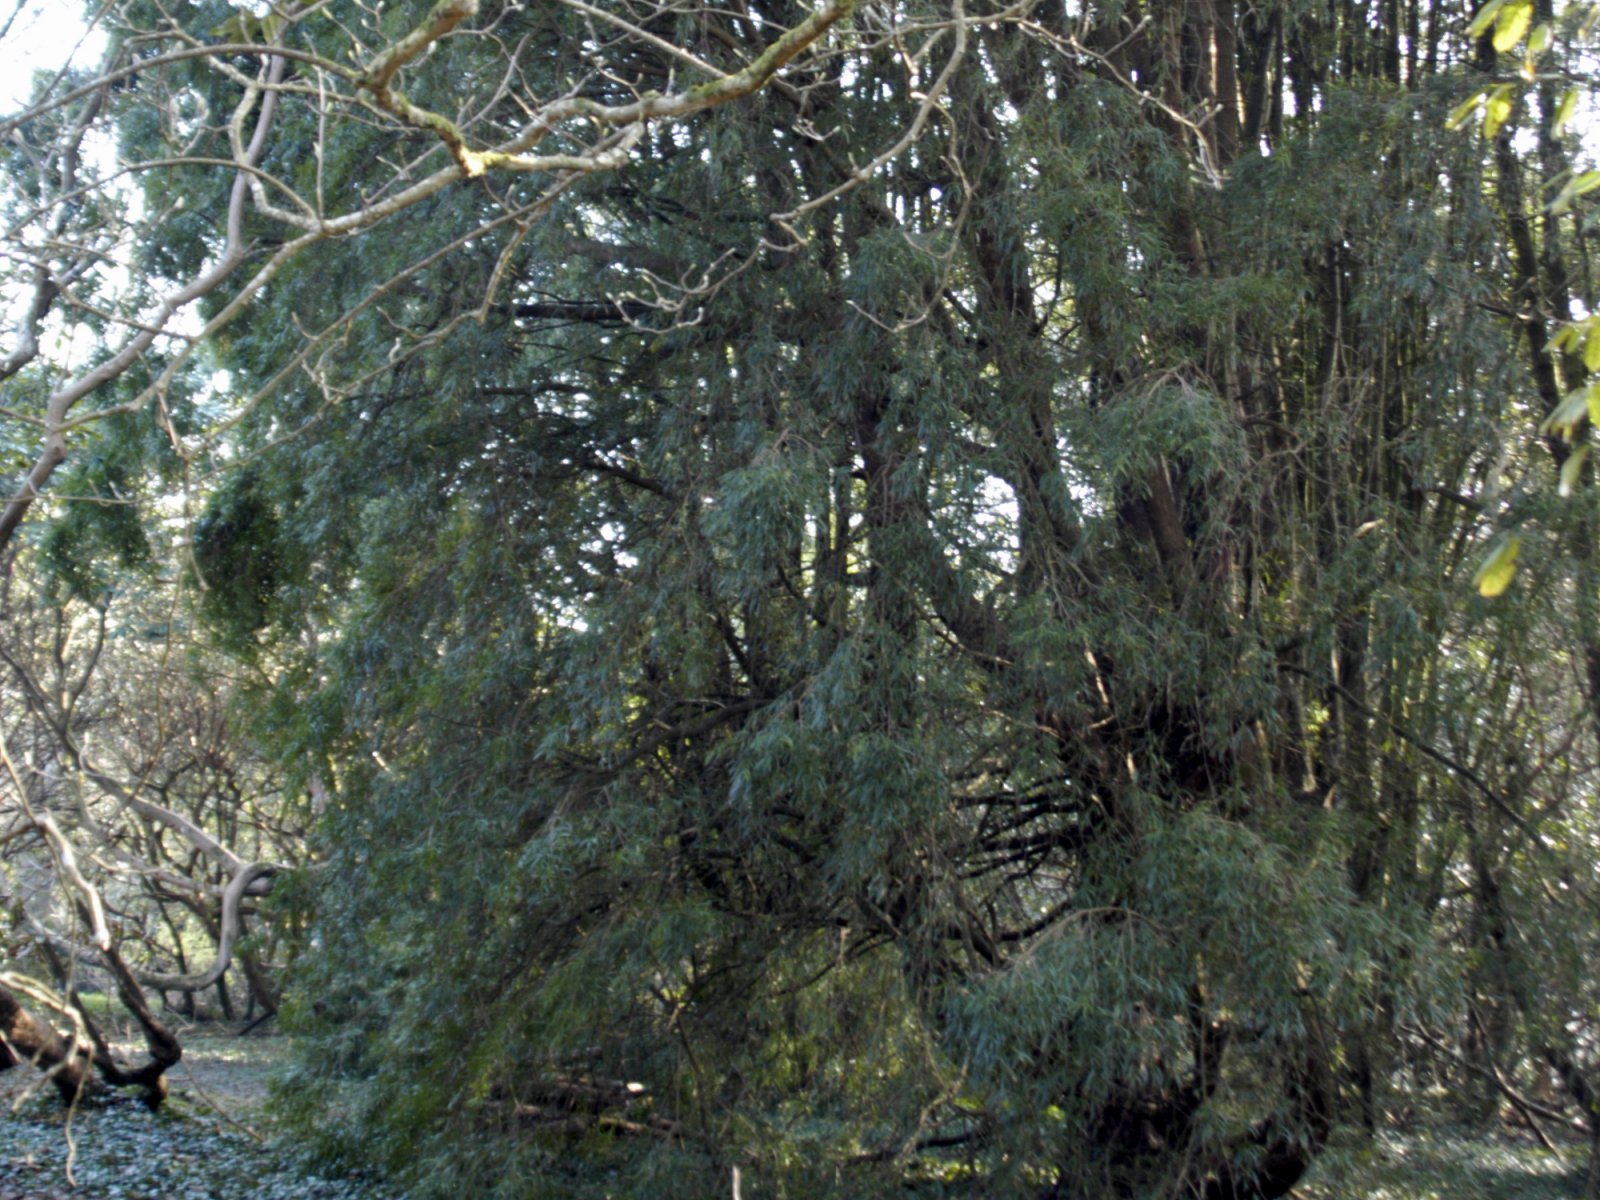 Podocarpus salignus